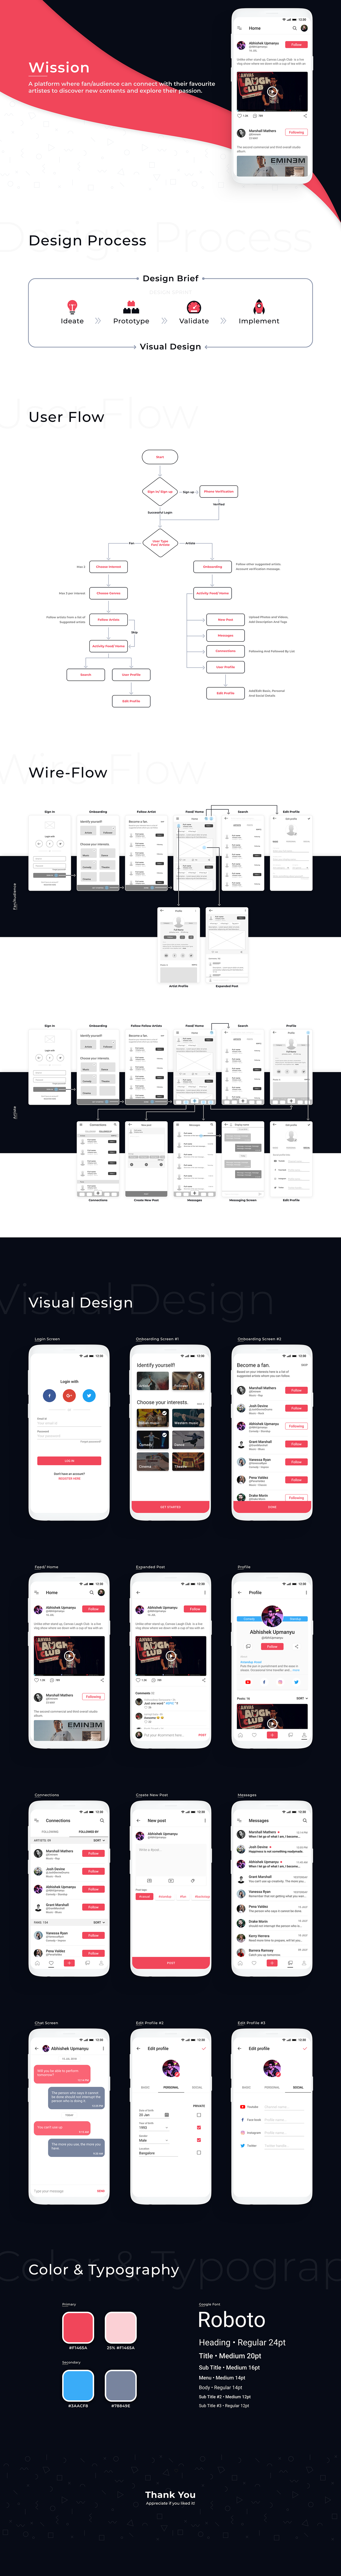 ux UI visual design Adobe XD UX process